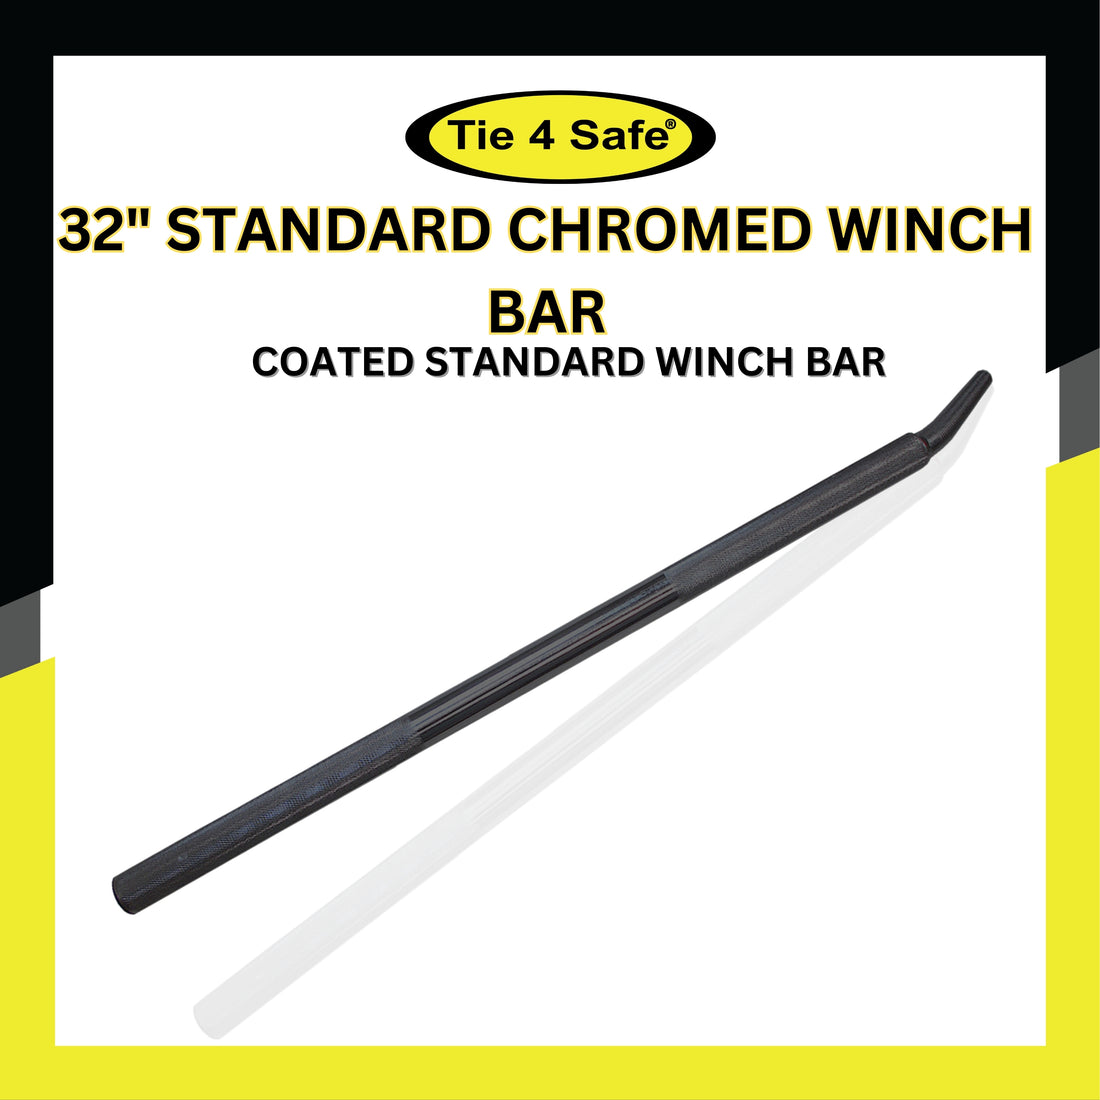 32" Standard Chromed Winch Bar